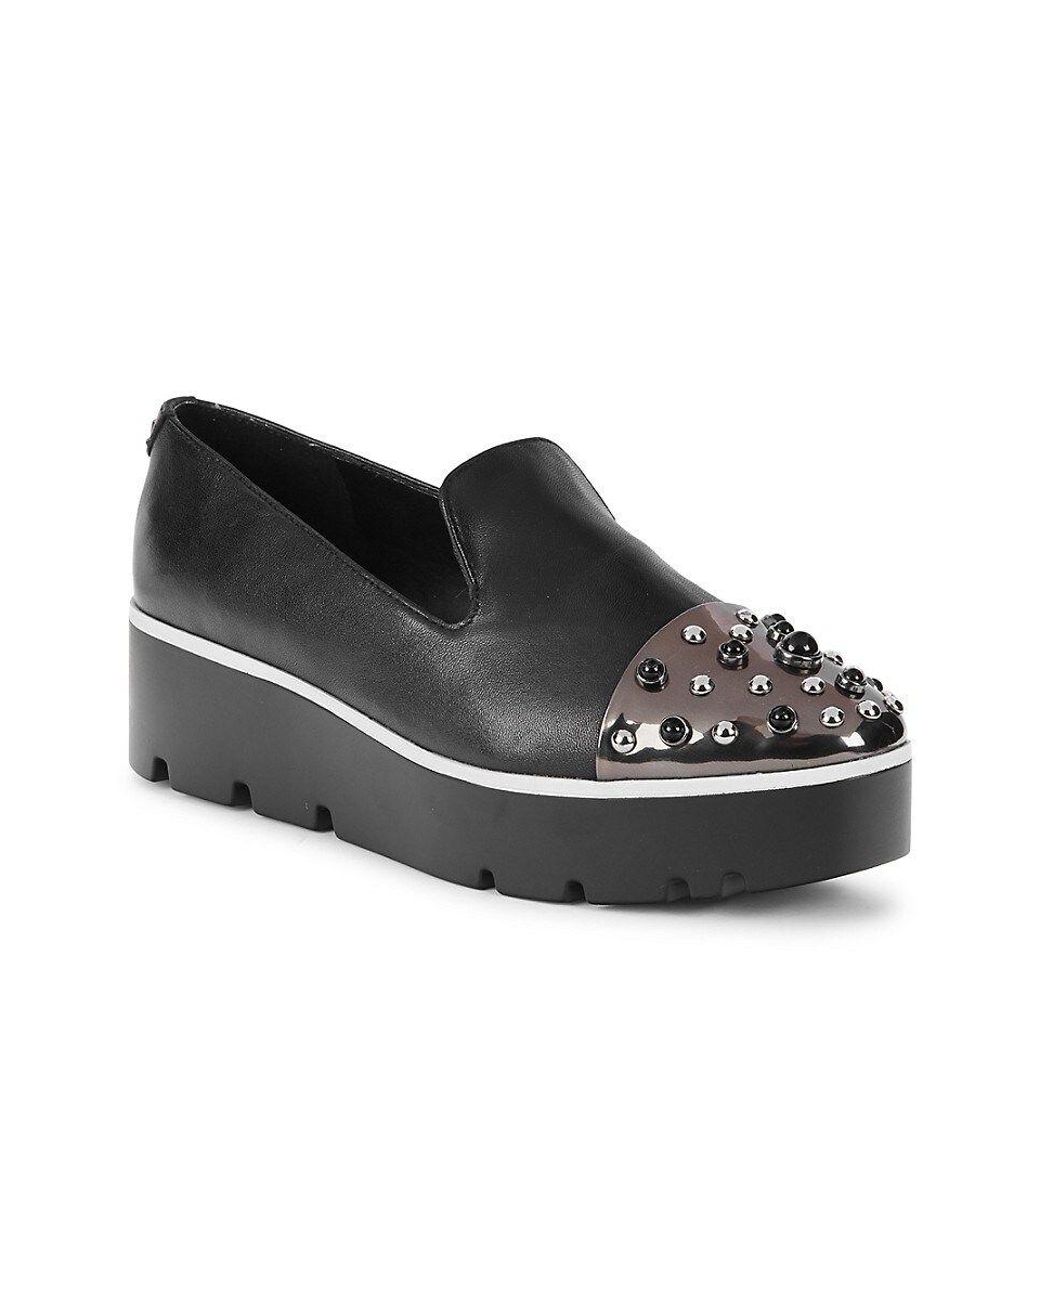 Karl Lagerfeld | Shoes | Karl Lagerfeld Sallie Black Leather Round Toe  Pumps Pearl Heels Size 8m | Poshmark